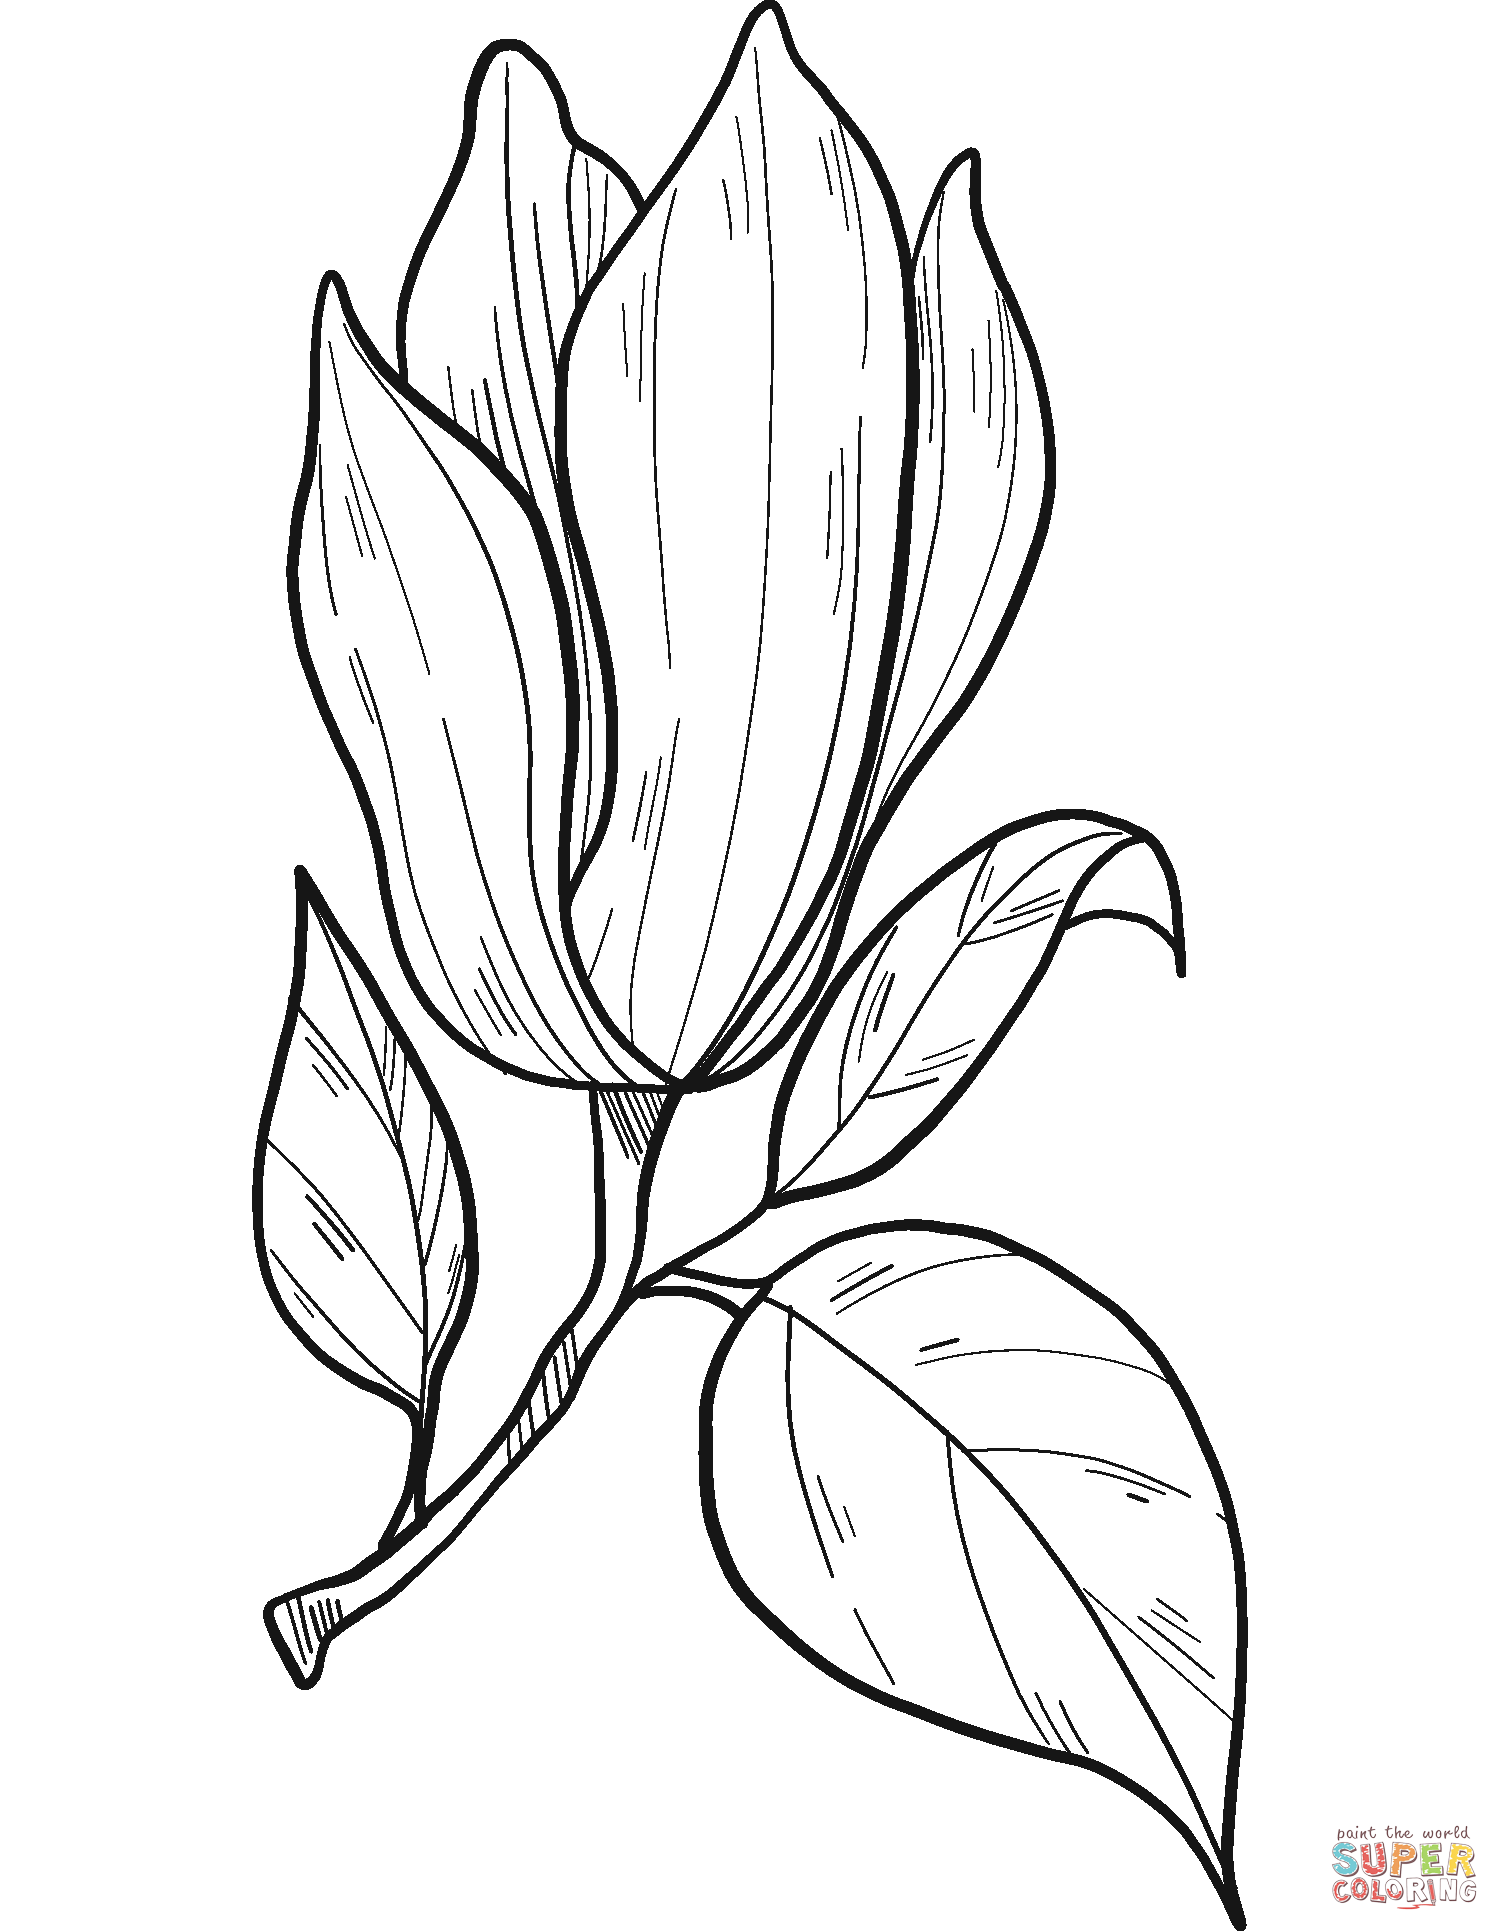 Magnolia flower drawing illustration. - Stock Illustration [38128262] -  PIXTA